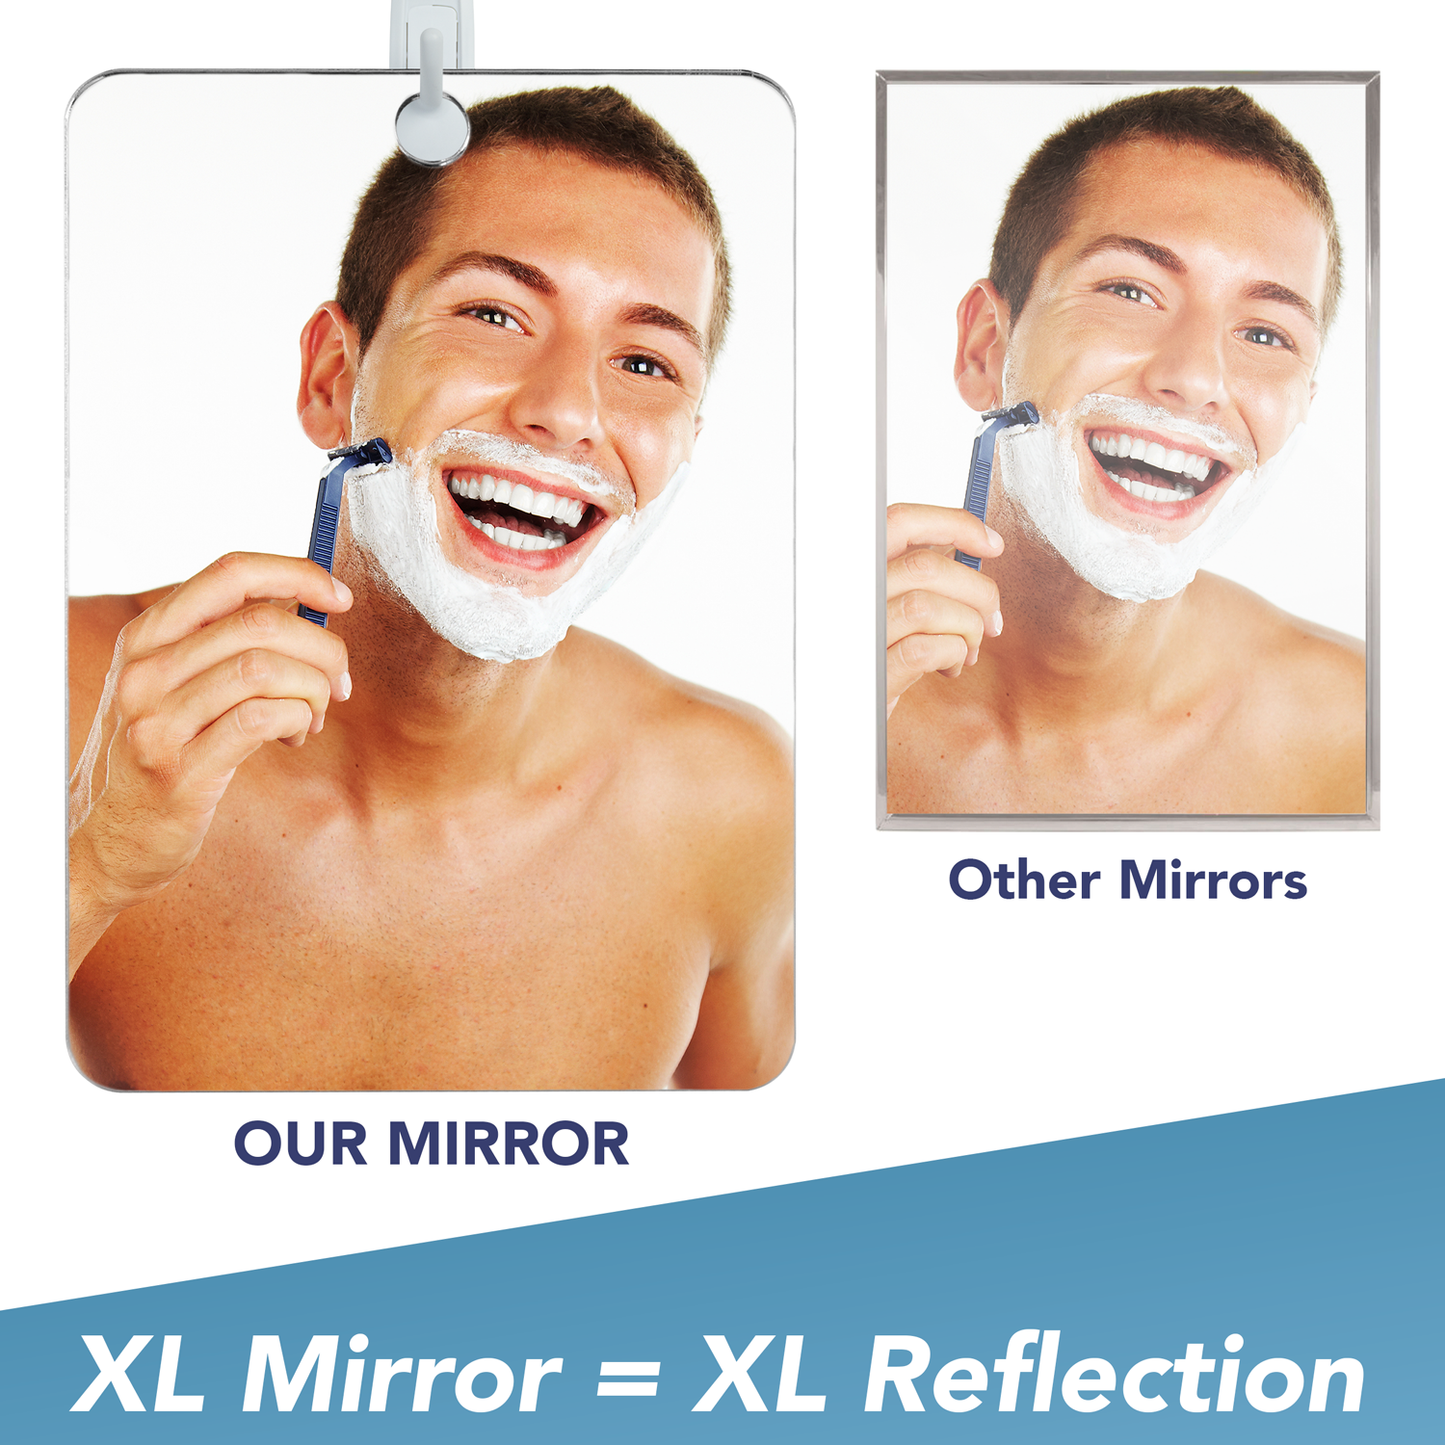 Shave Well Anti-Fog XL Shower Mirror - Fogless Bathroom Shaving Mirror